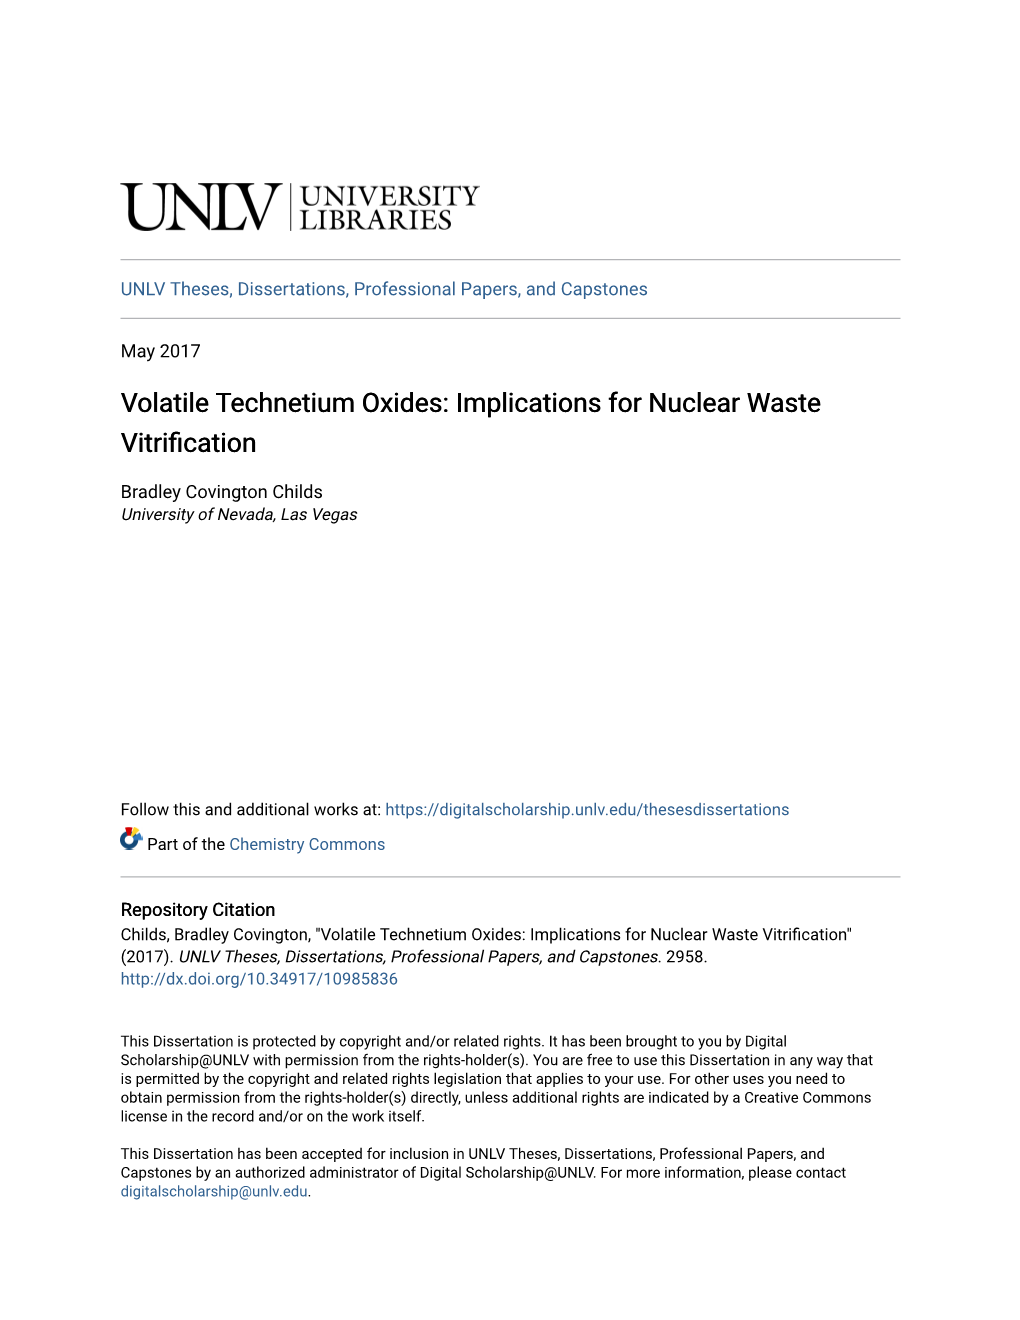 Volatile Technetium Oxides: Implications for Nuclear Waste Vitrification